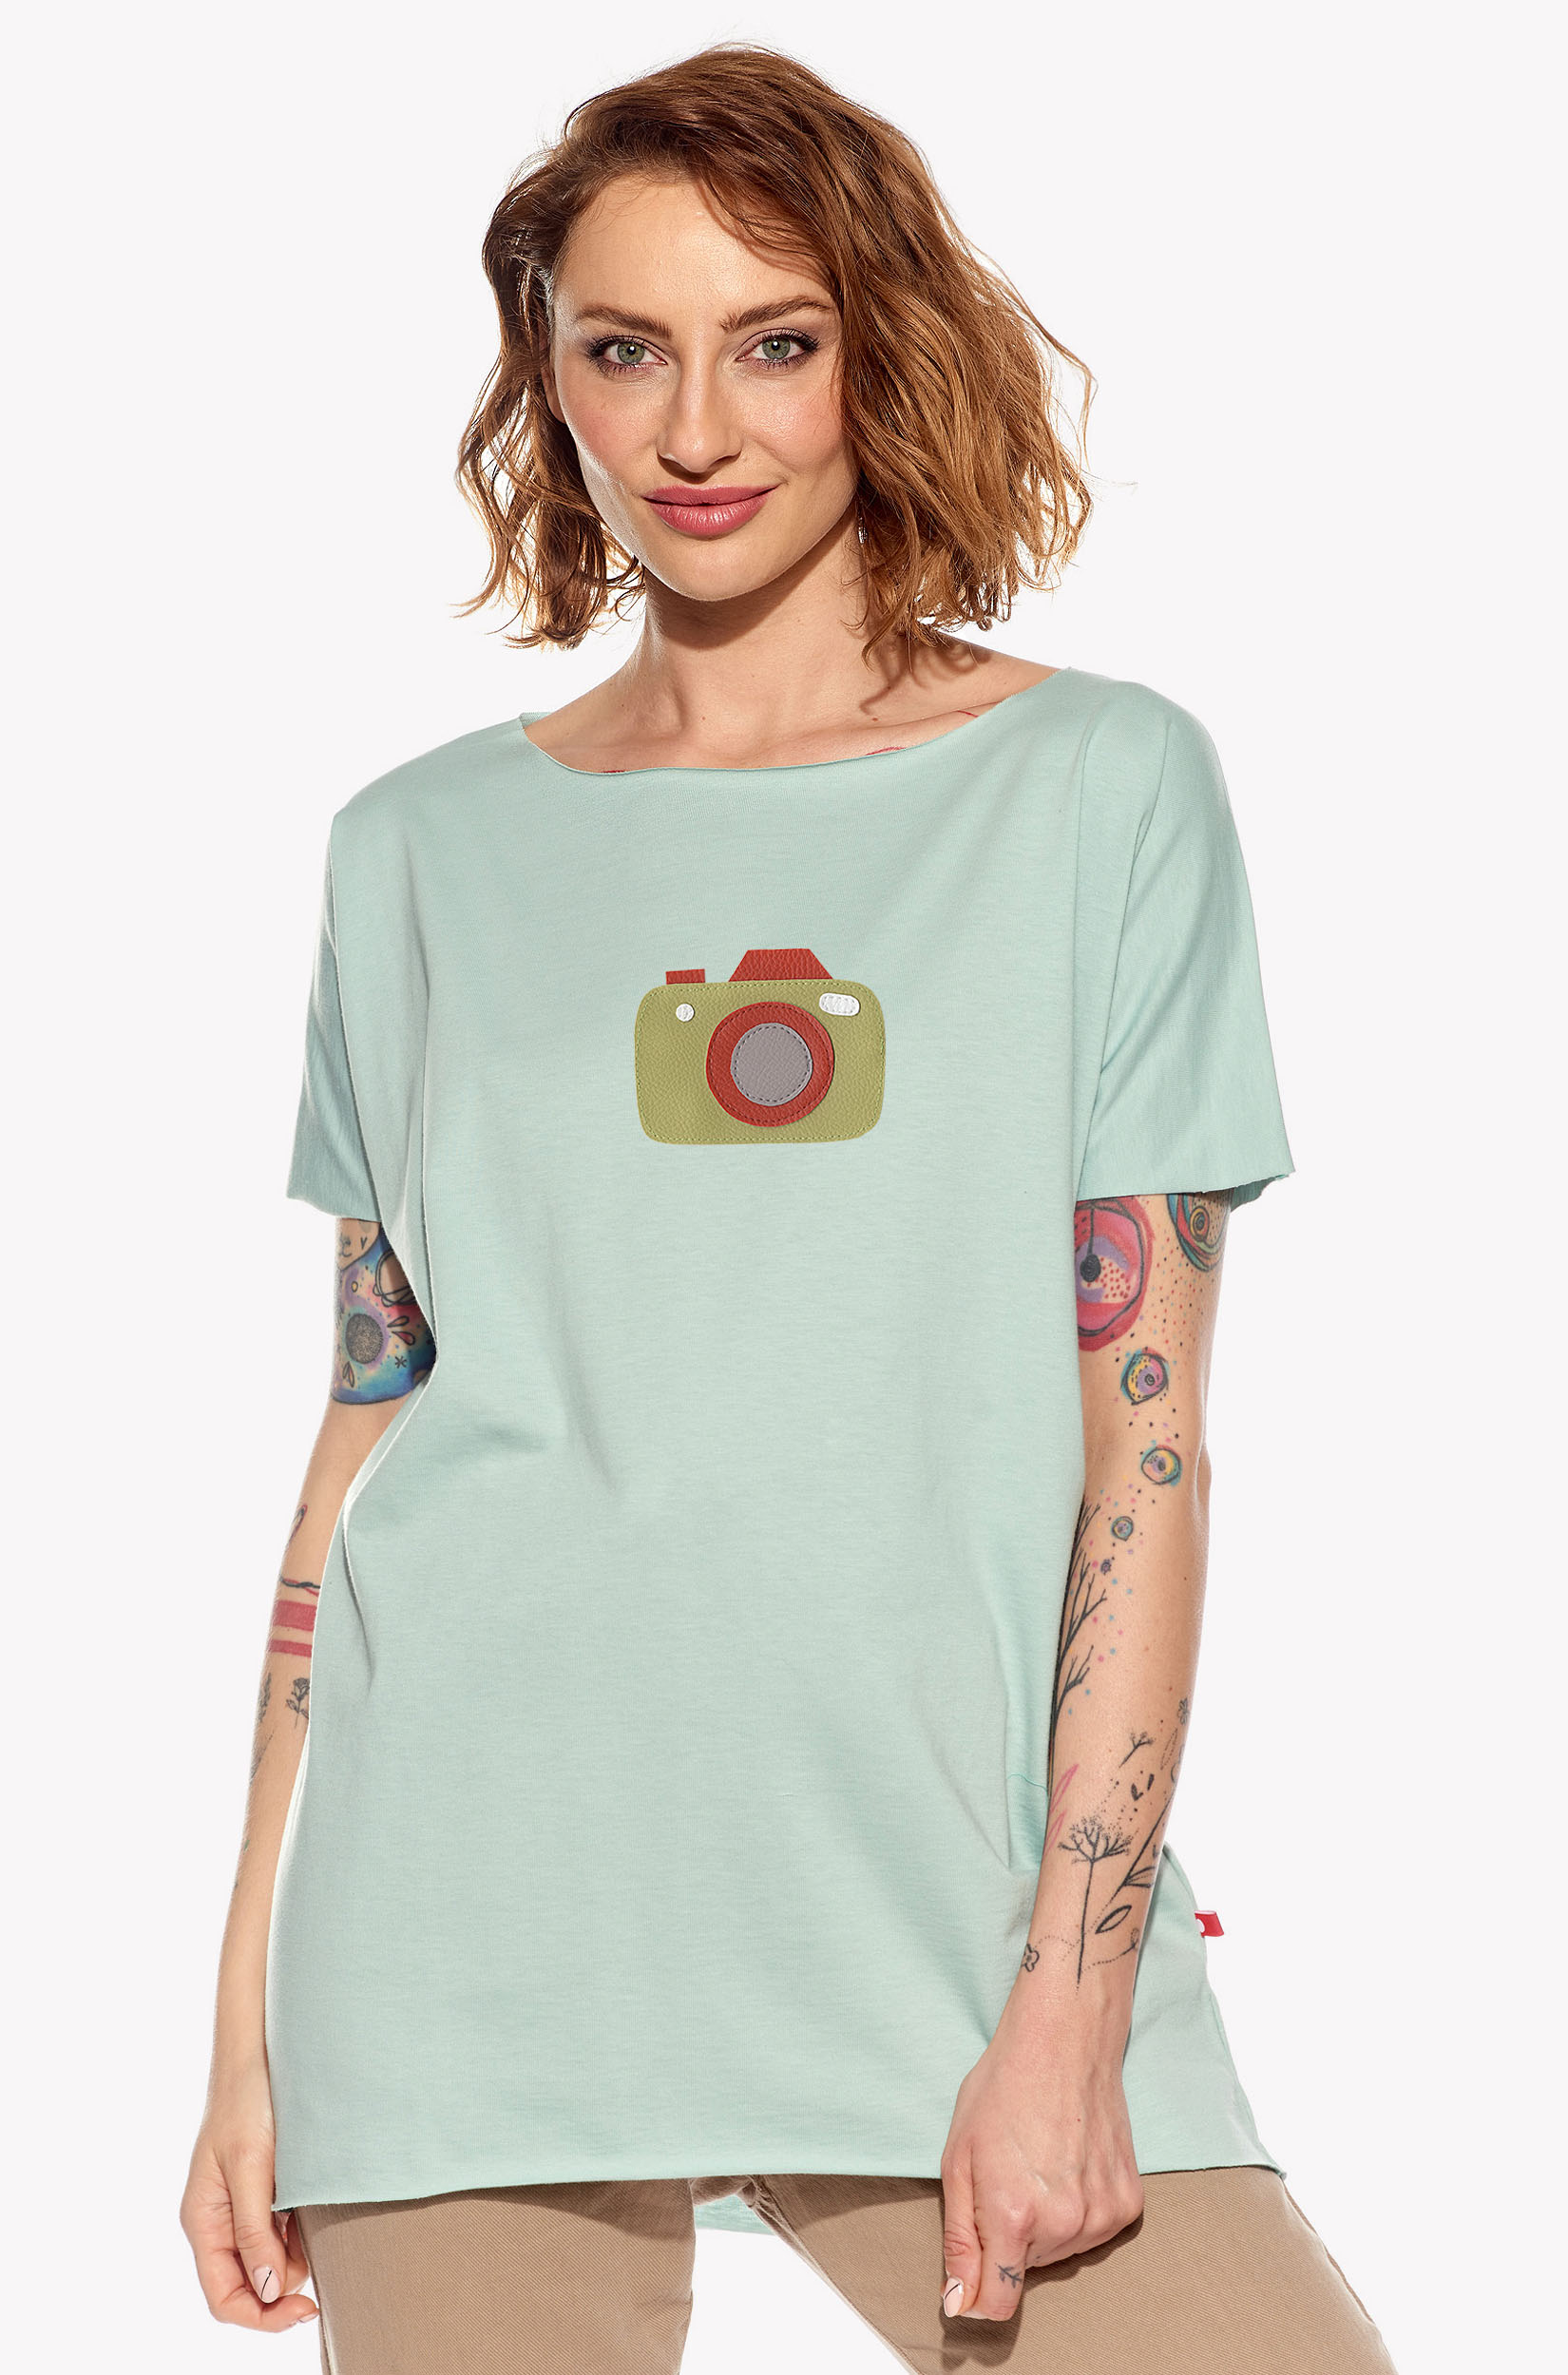 Shirt with camera